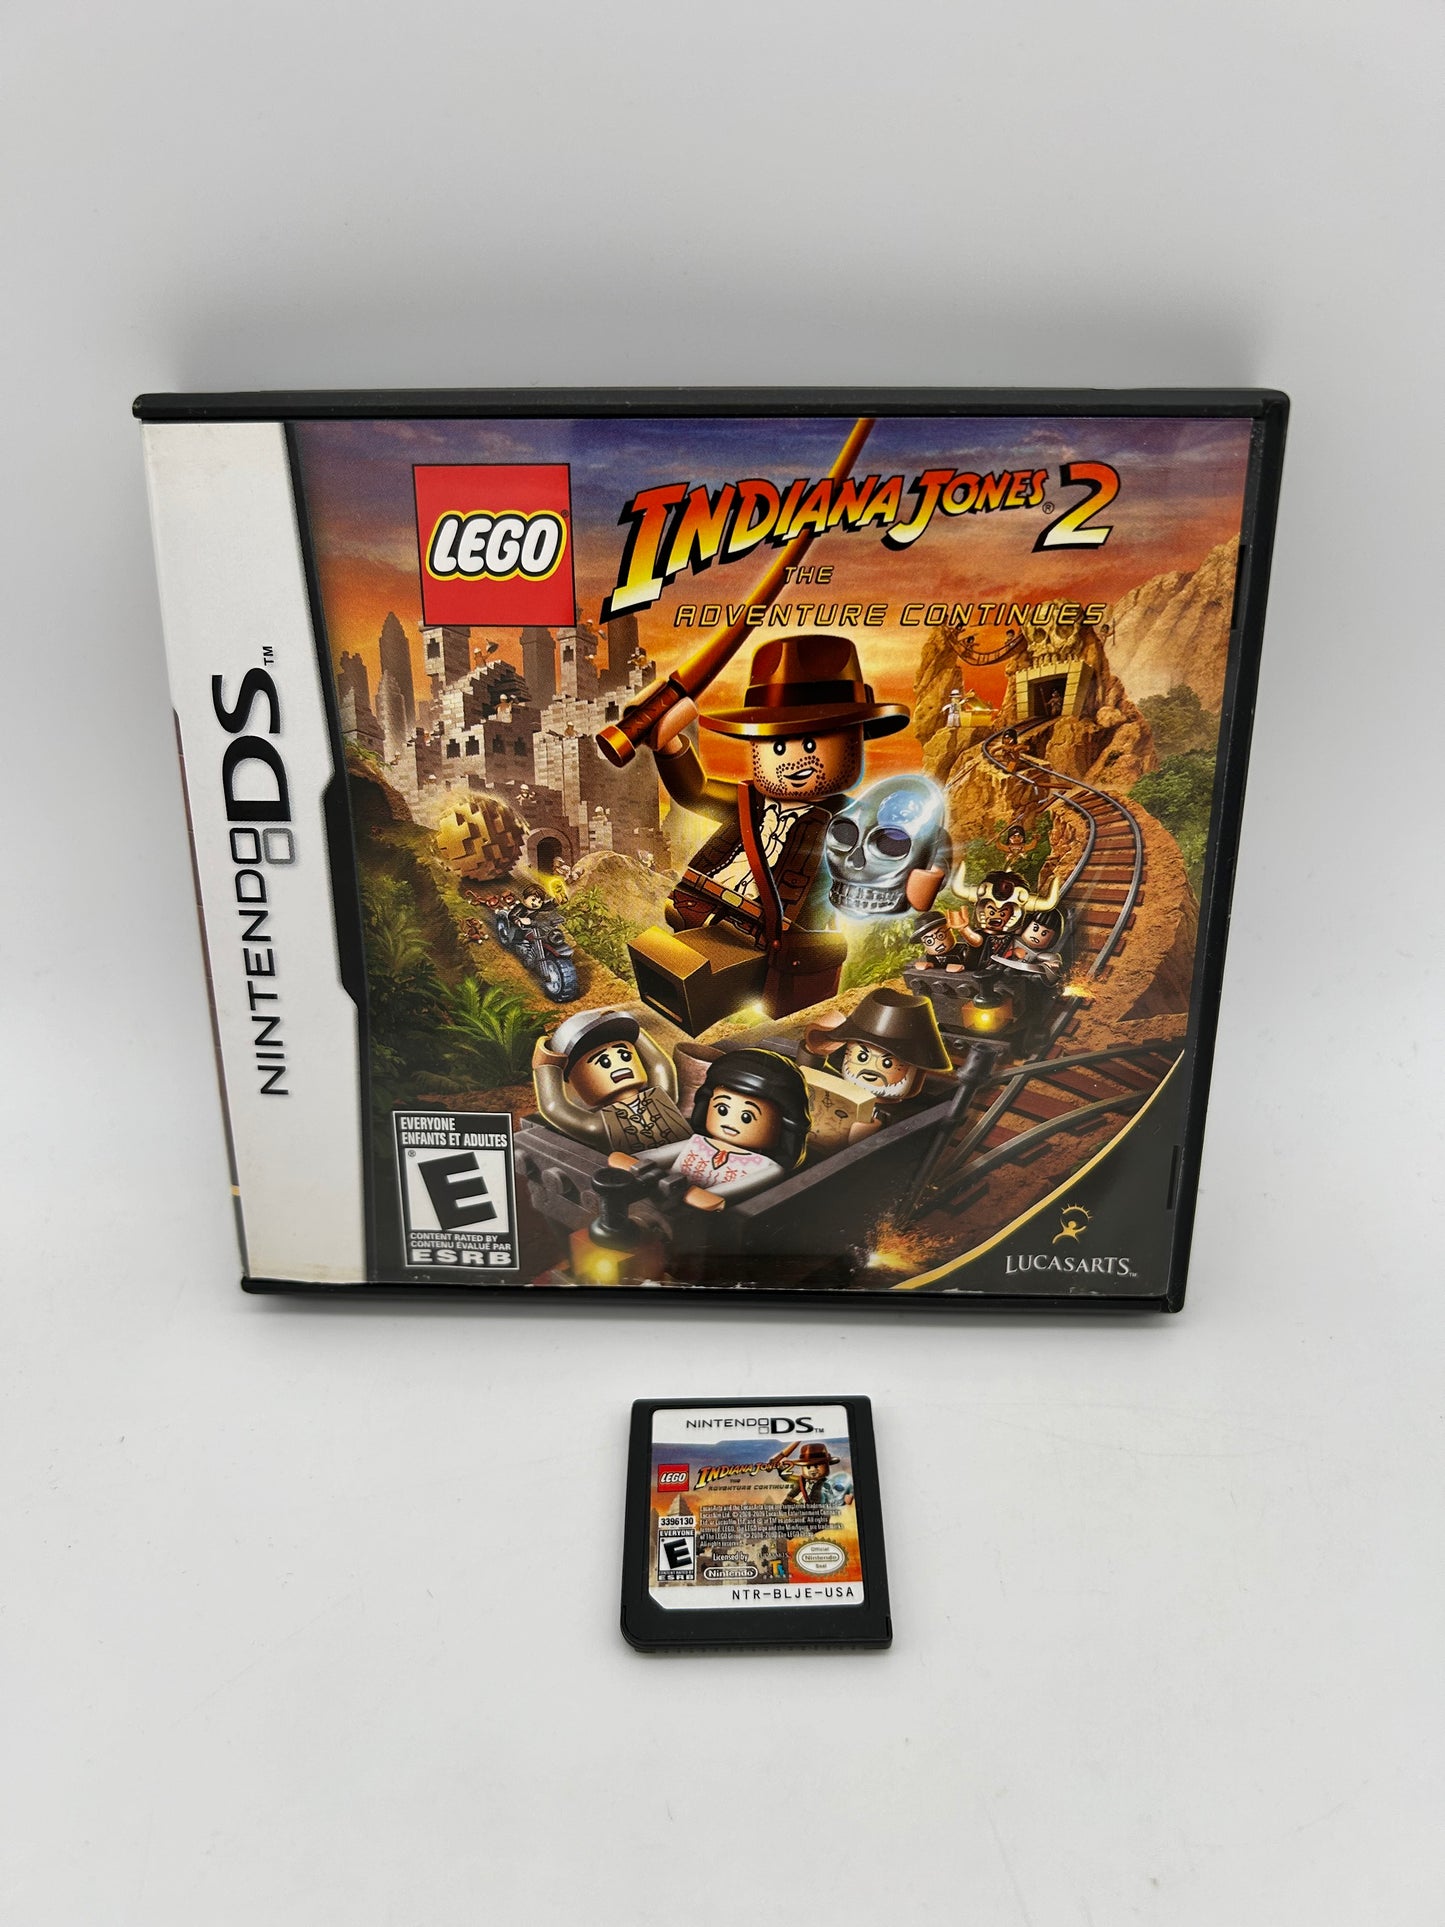 PiXEL-RETRO.COM : NINTENDO DS (DS) COMPLETE CIB BOX MANUAL GAME NTSC LEGO INDIANA JONES 2 THE ADVENTURE CONTINUES